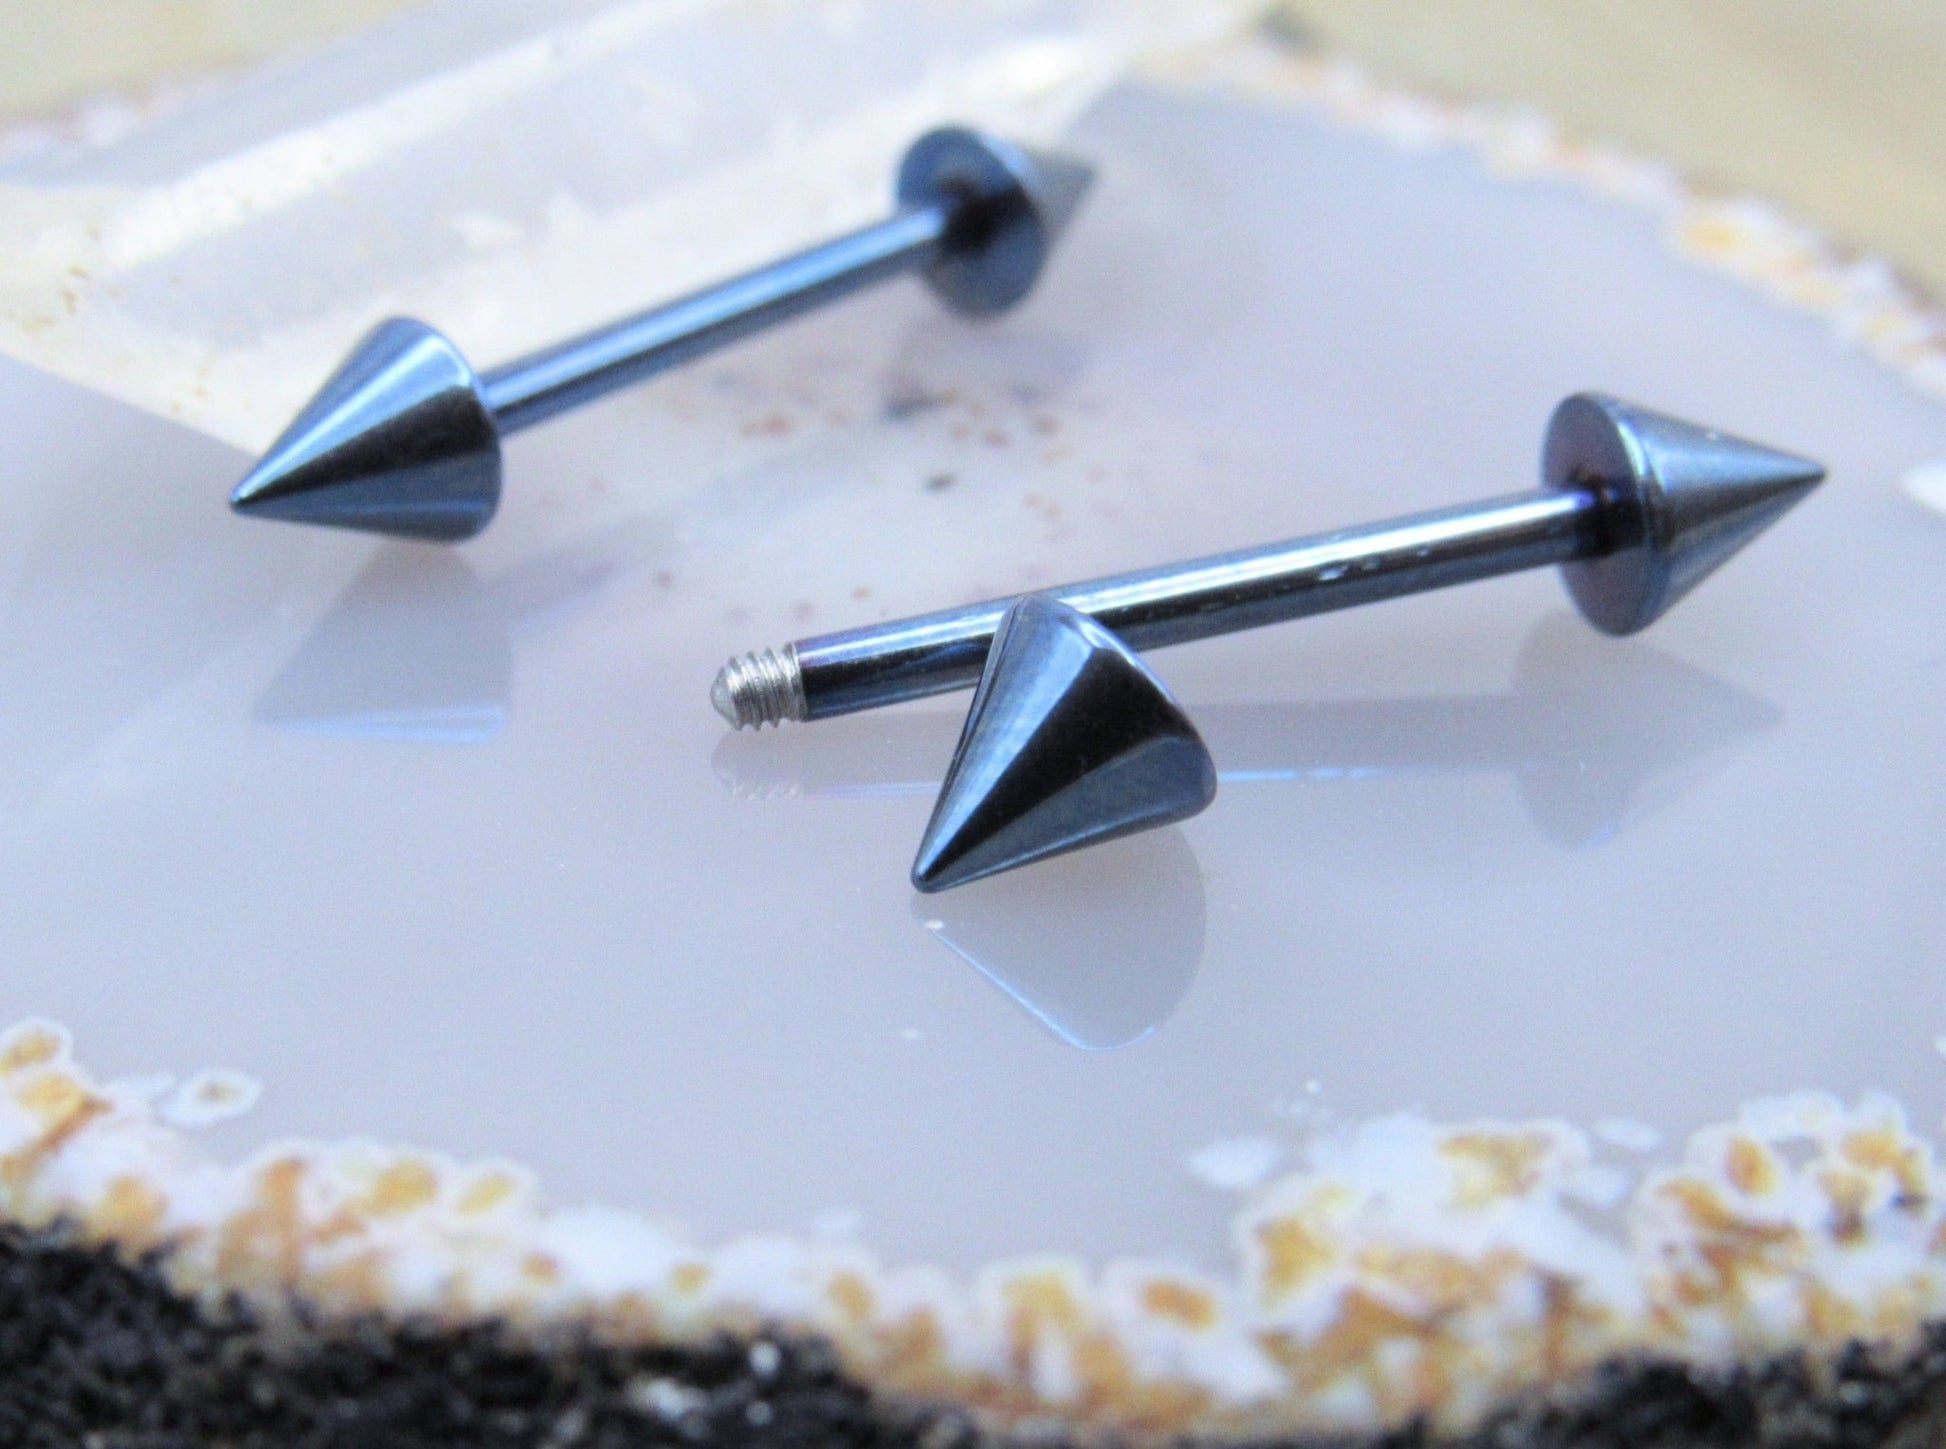 14g Titanium nipple piercing barbell set straight high polish silver  internally threaded body jewelry pair